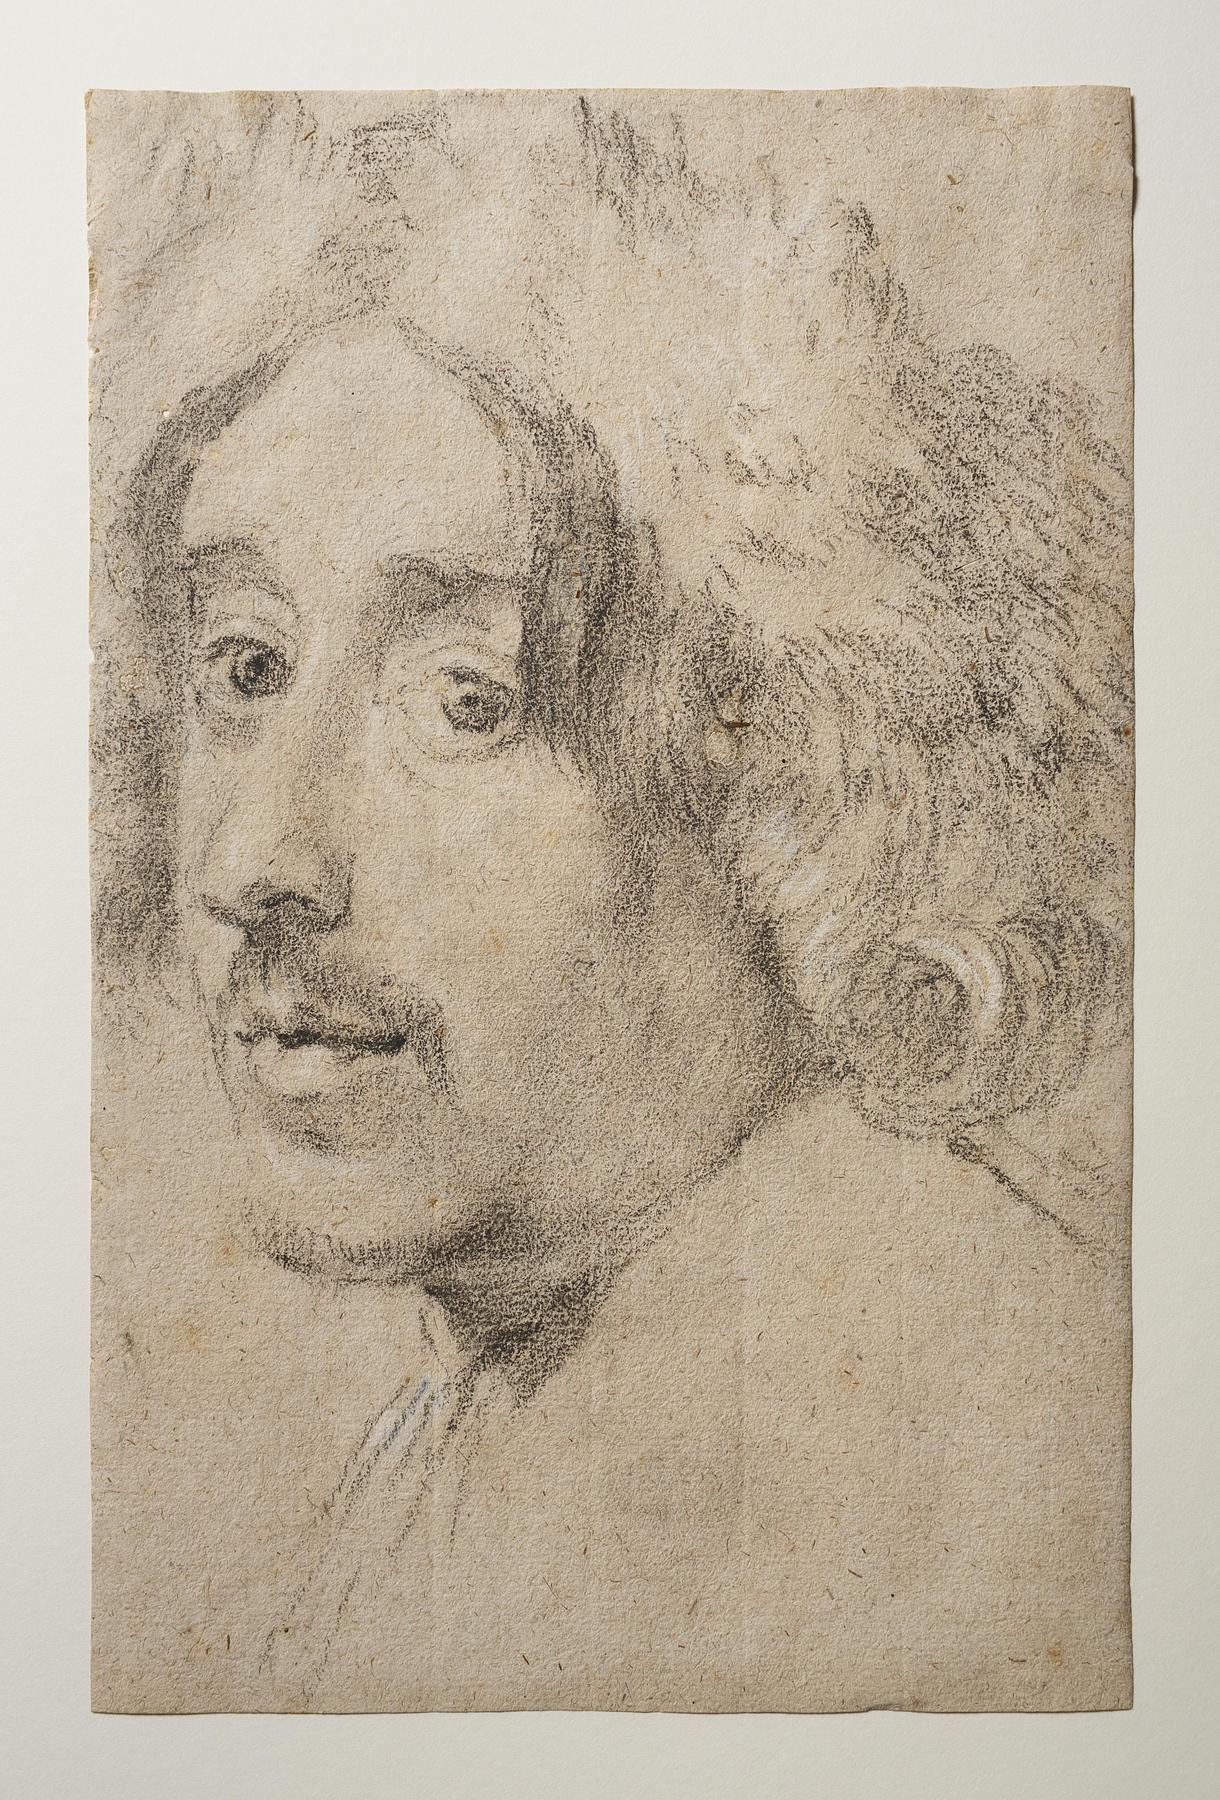 Bernini's self portrait, D472